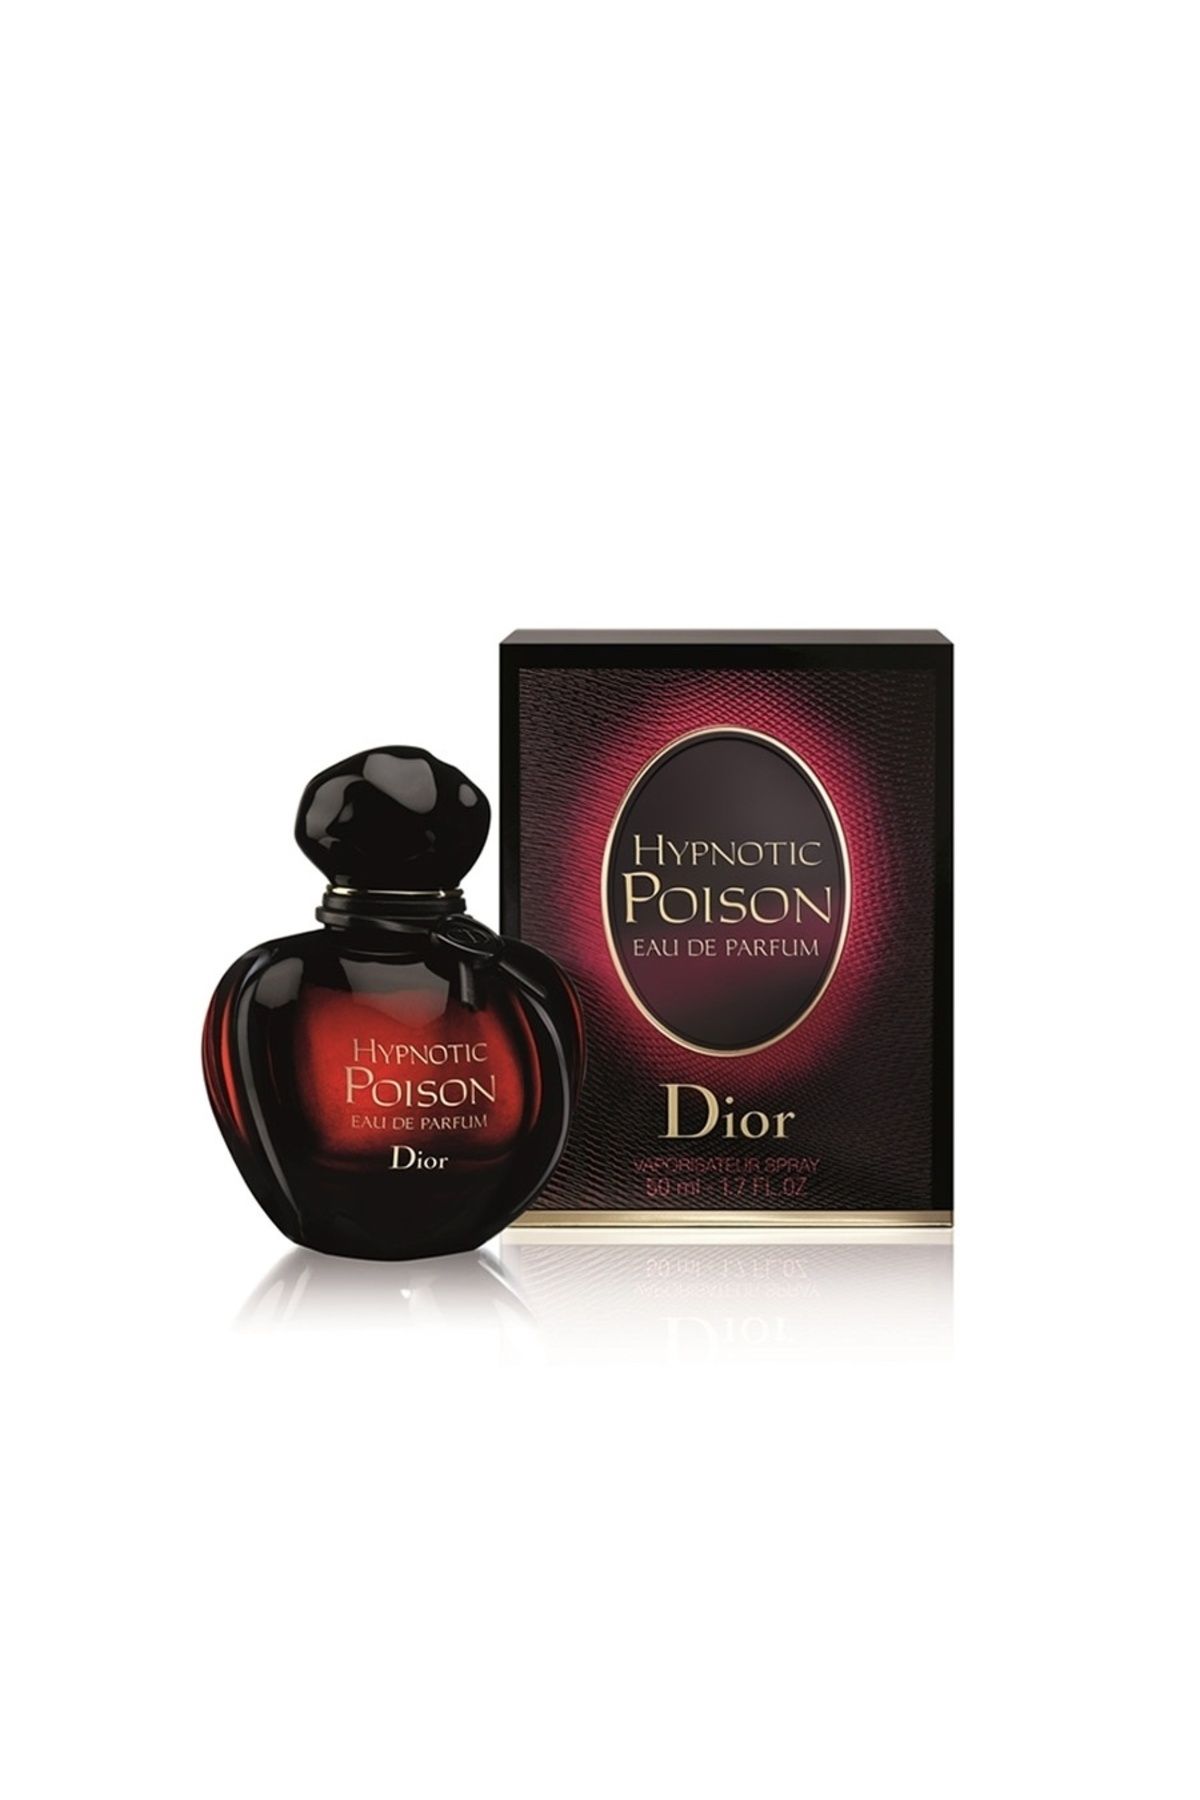 Dior HYPNOTİC POİSON UNİQUE FRAGRANCE EDP PERFUME 50 ML DEMBA1252